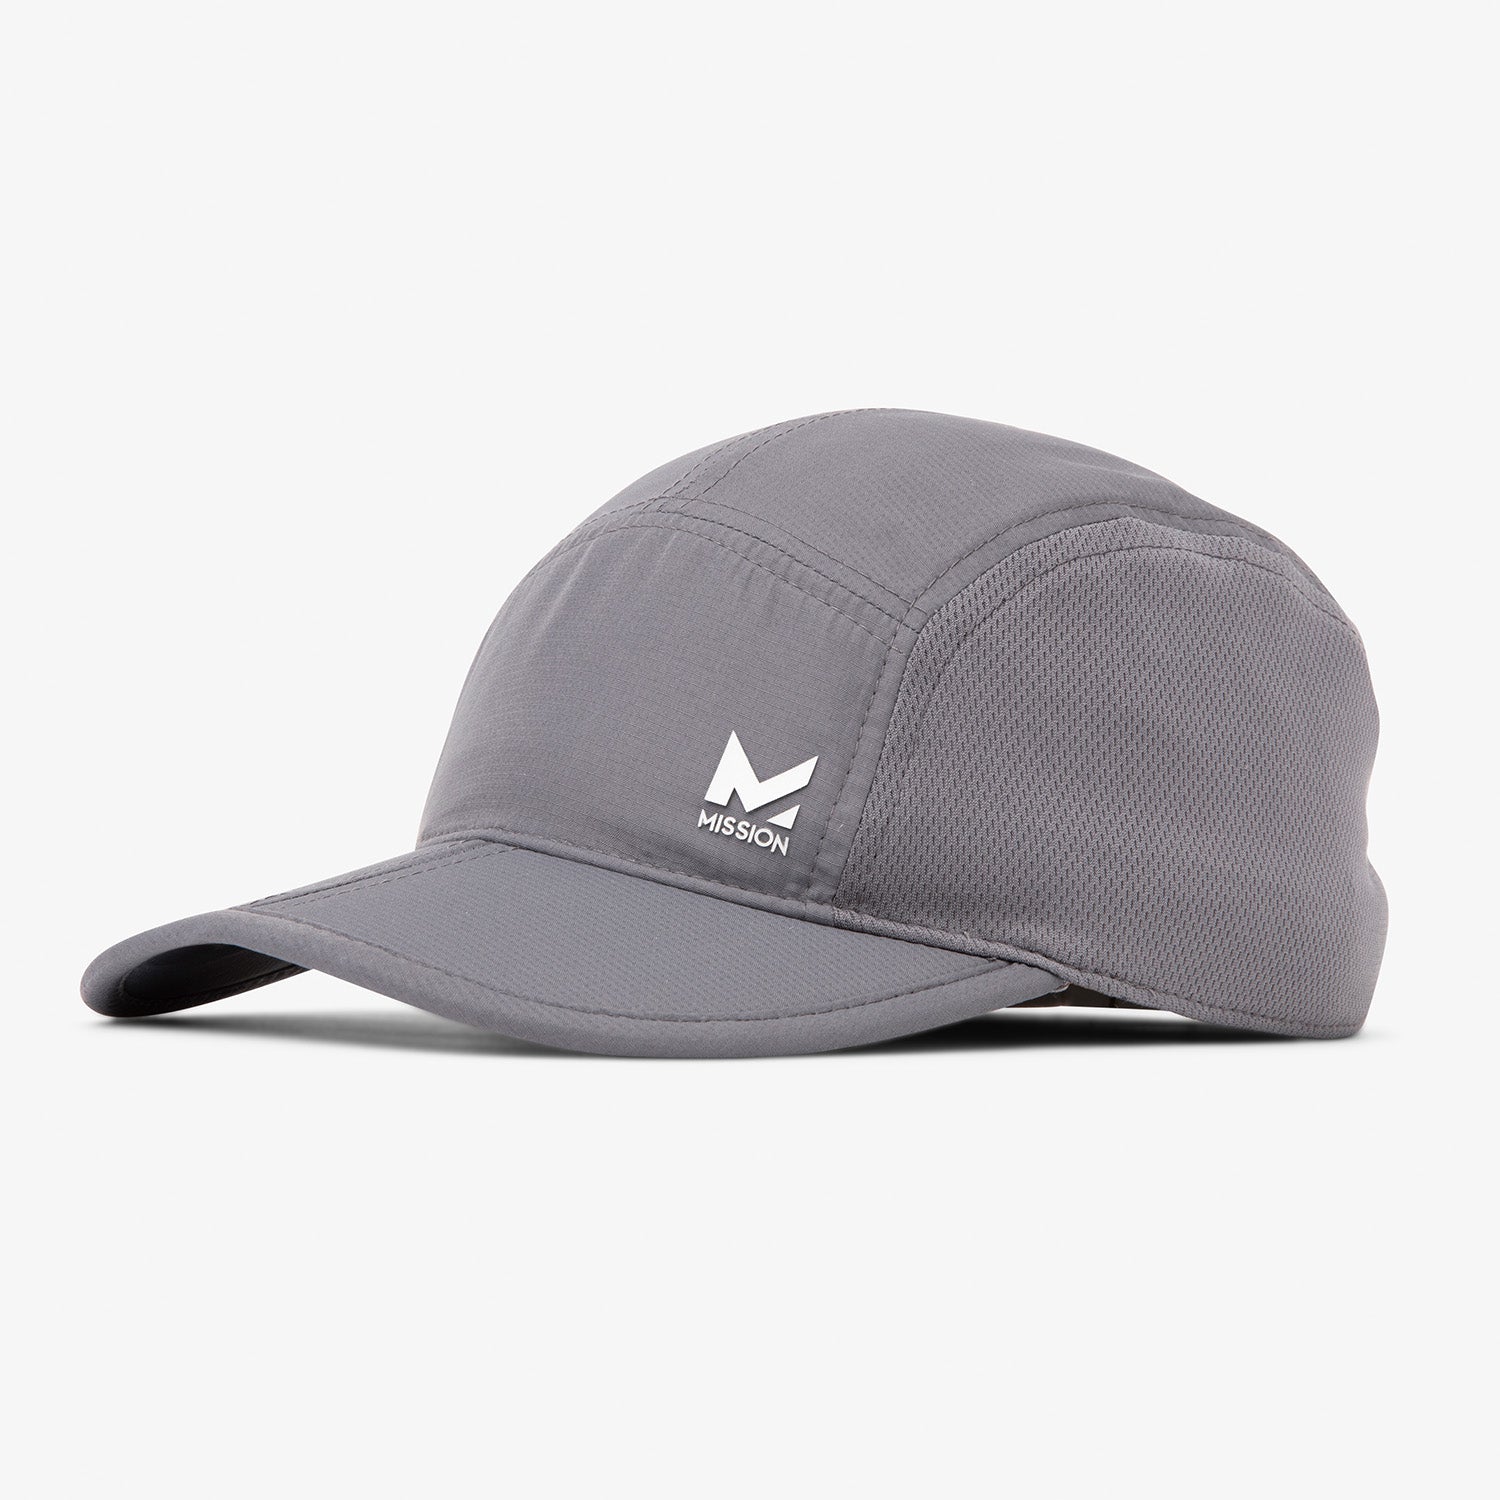 Foldable Performance Hat Caps MISSION Charcoal  